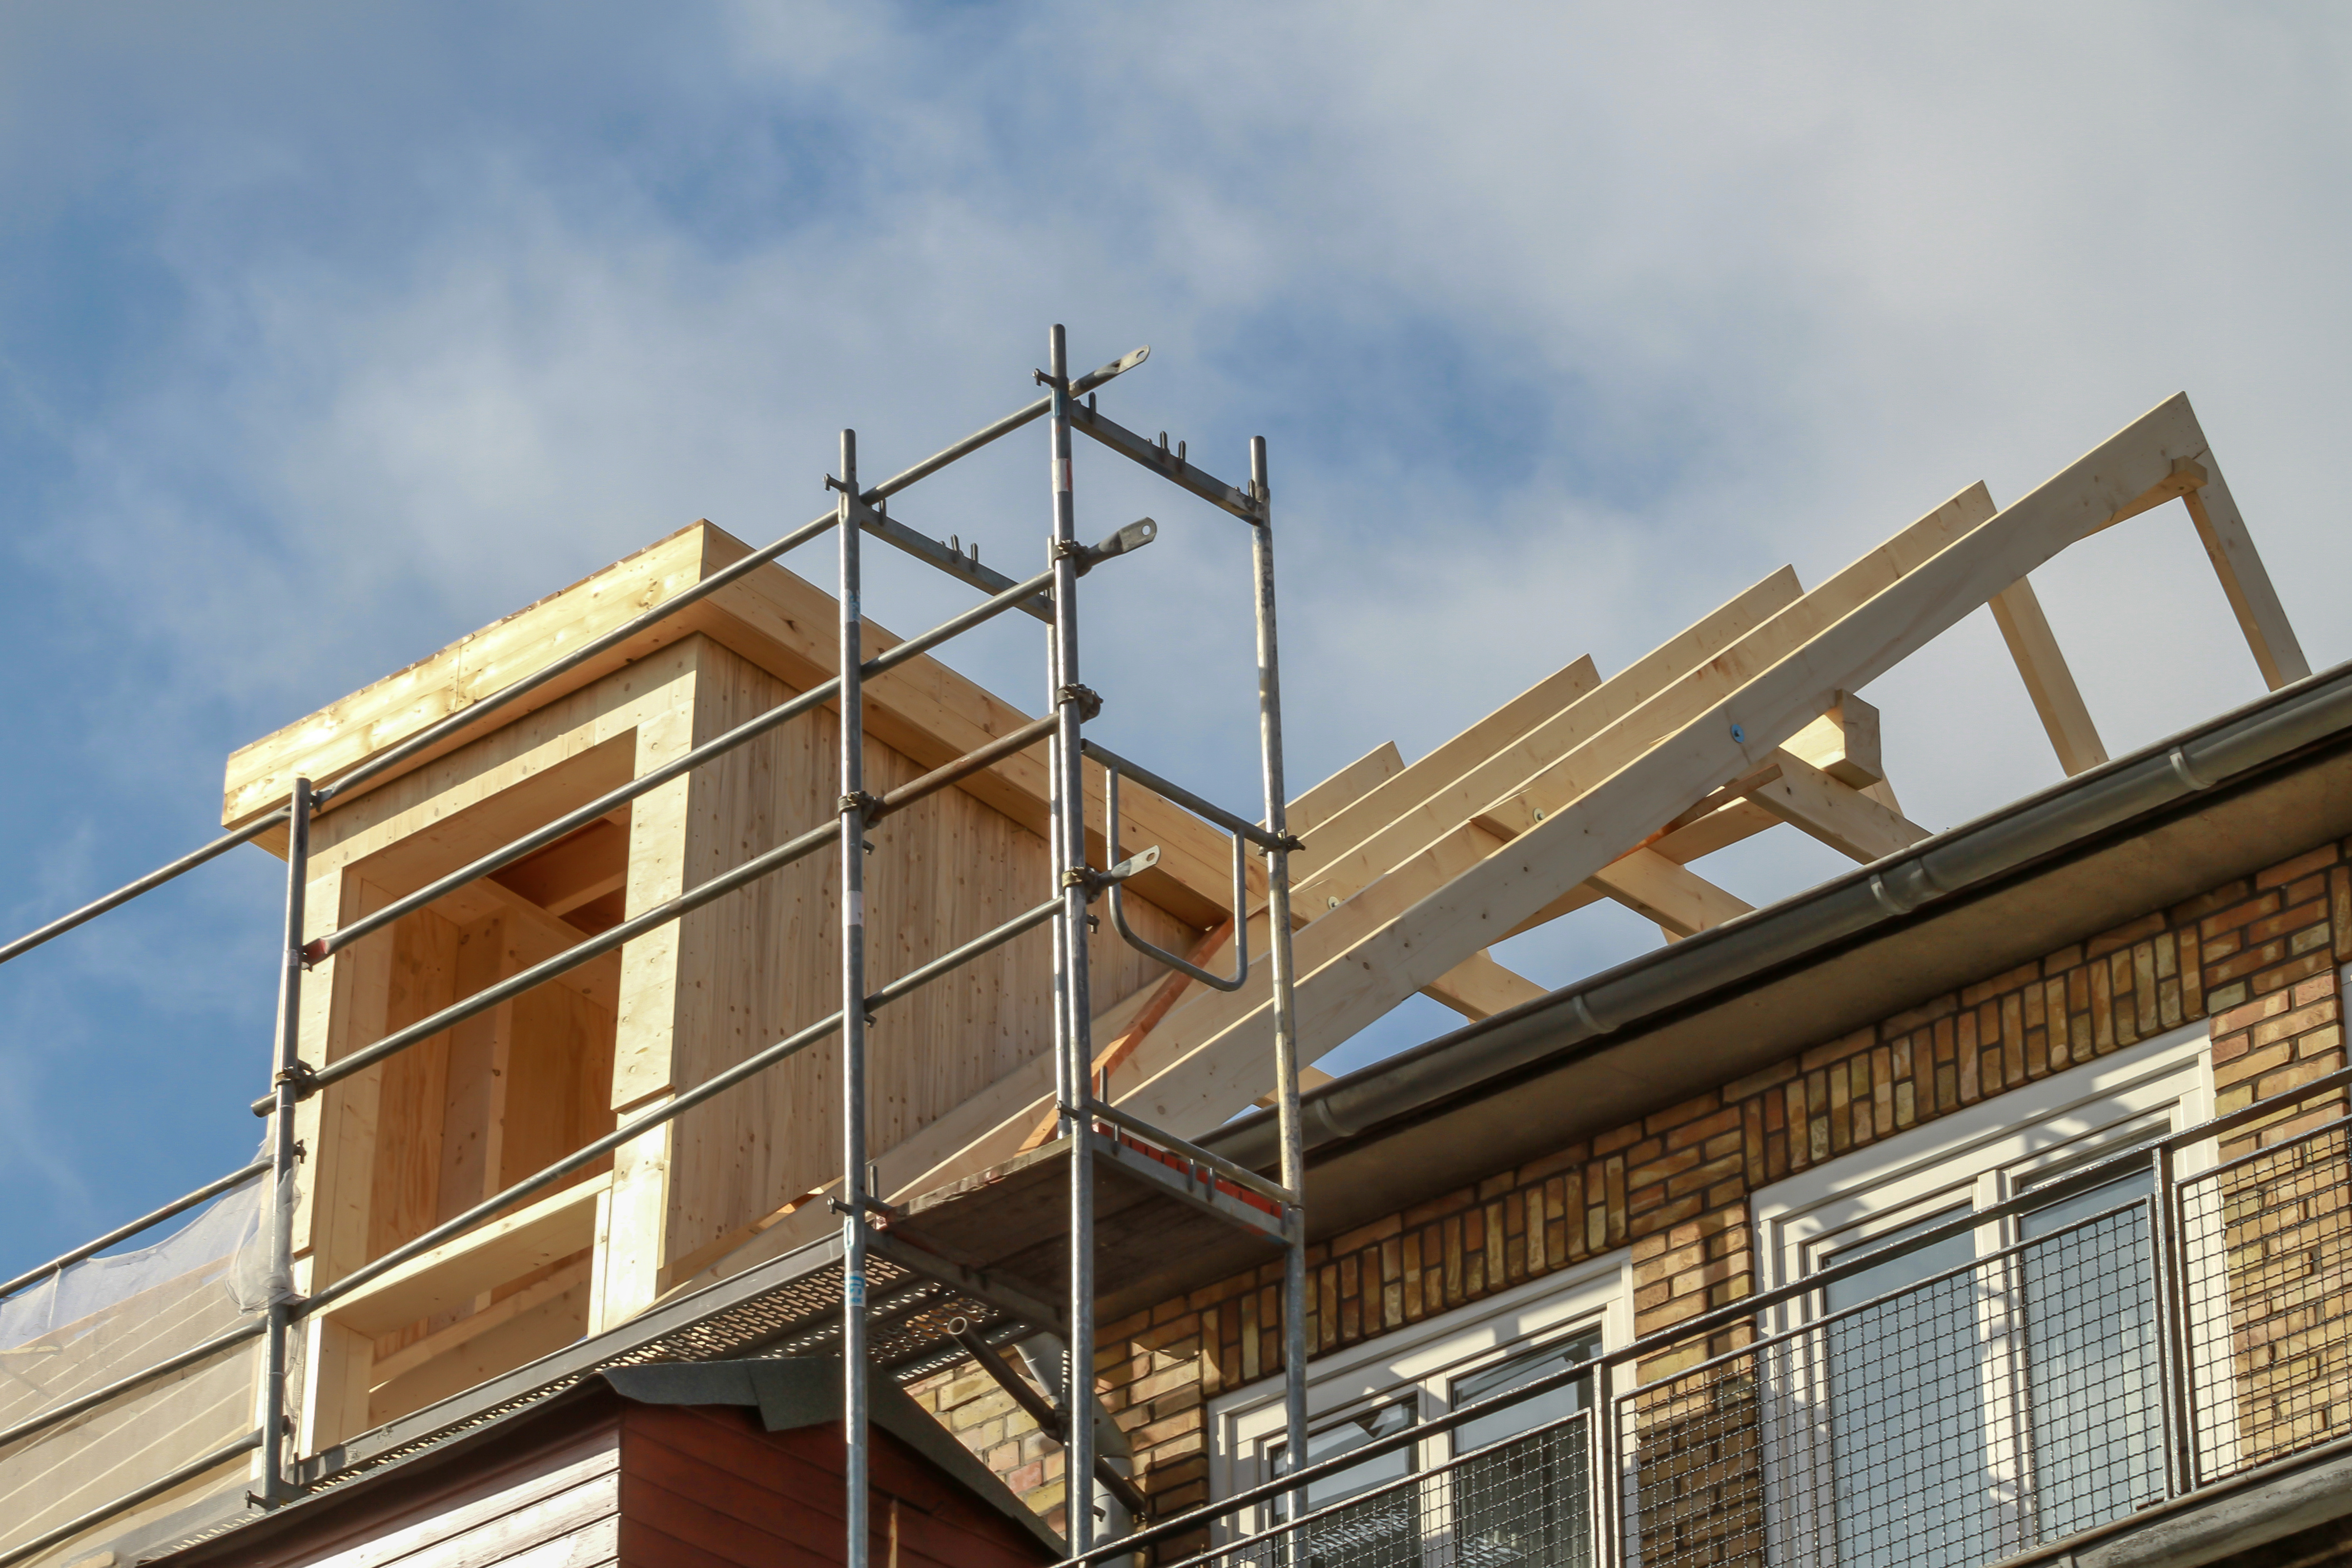 Building Regulations for Dormer Windows